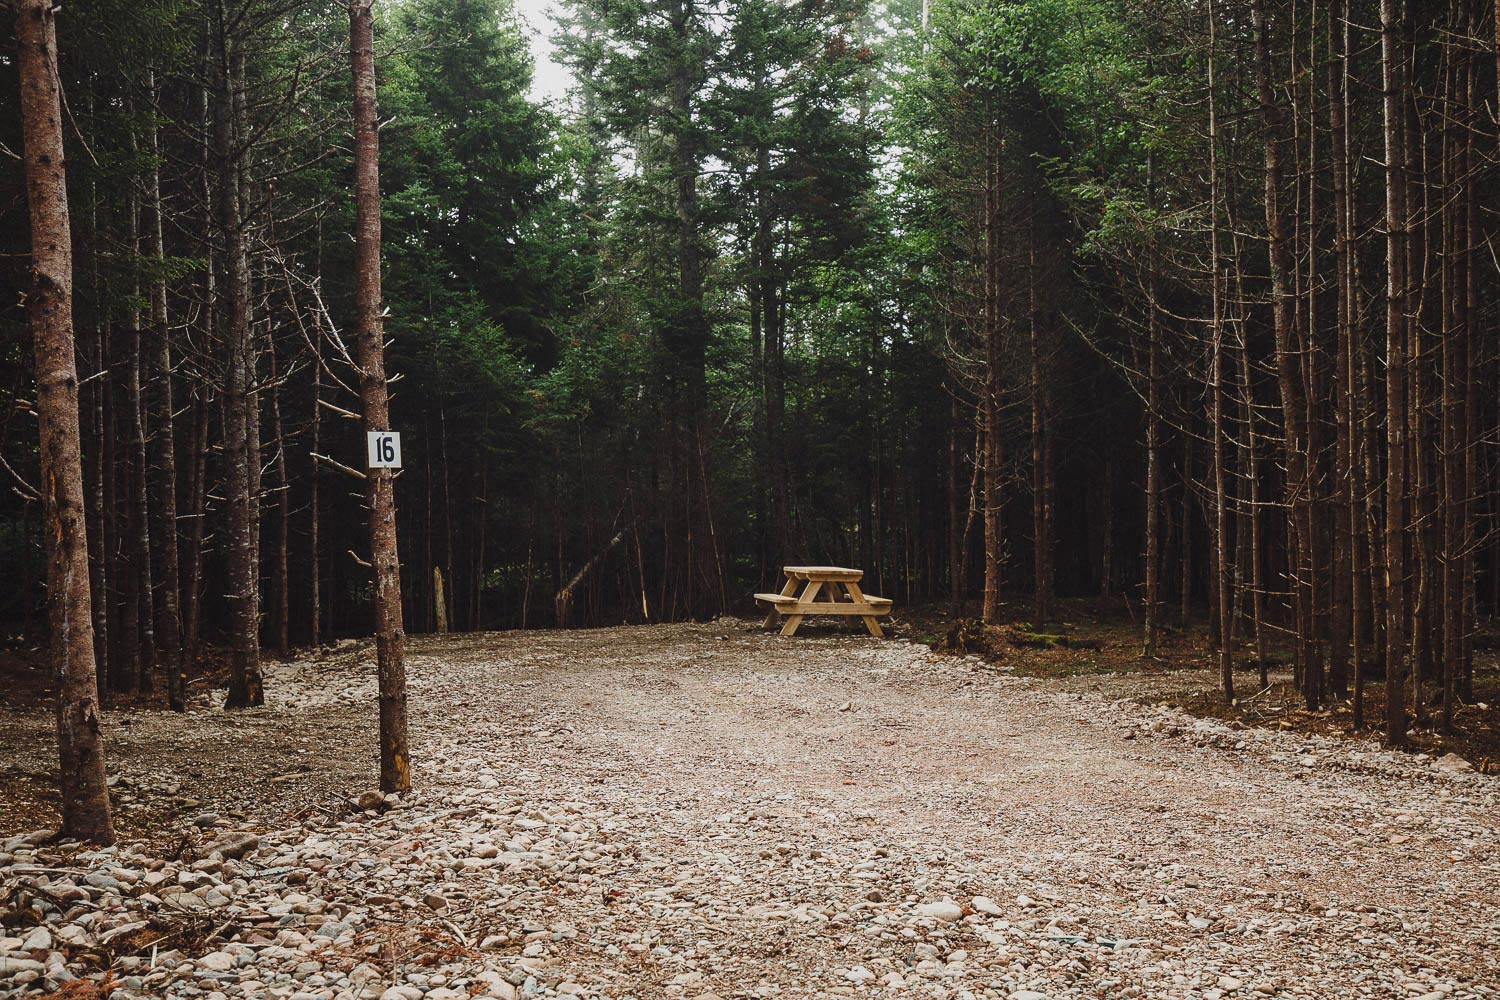 camp site 16